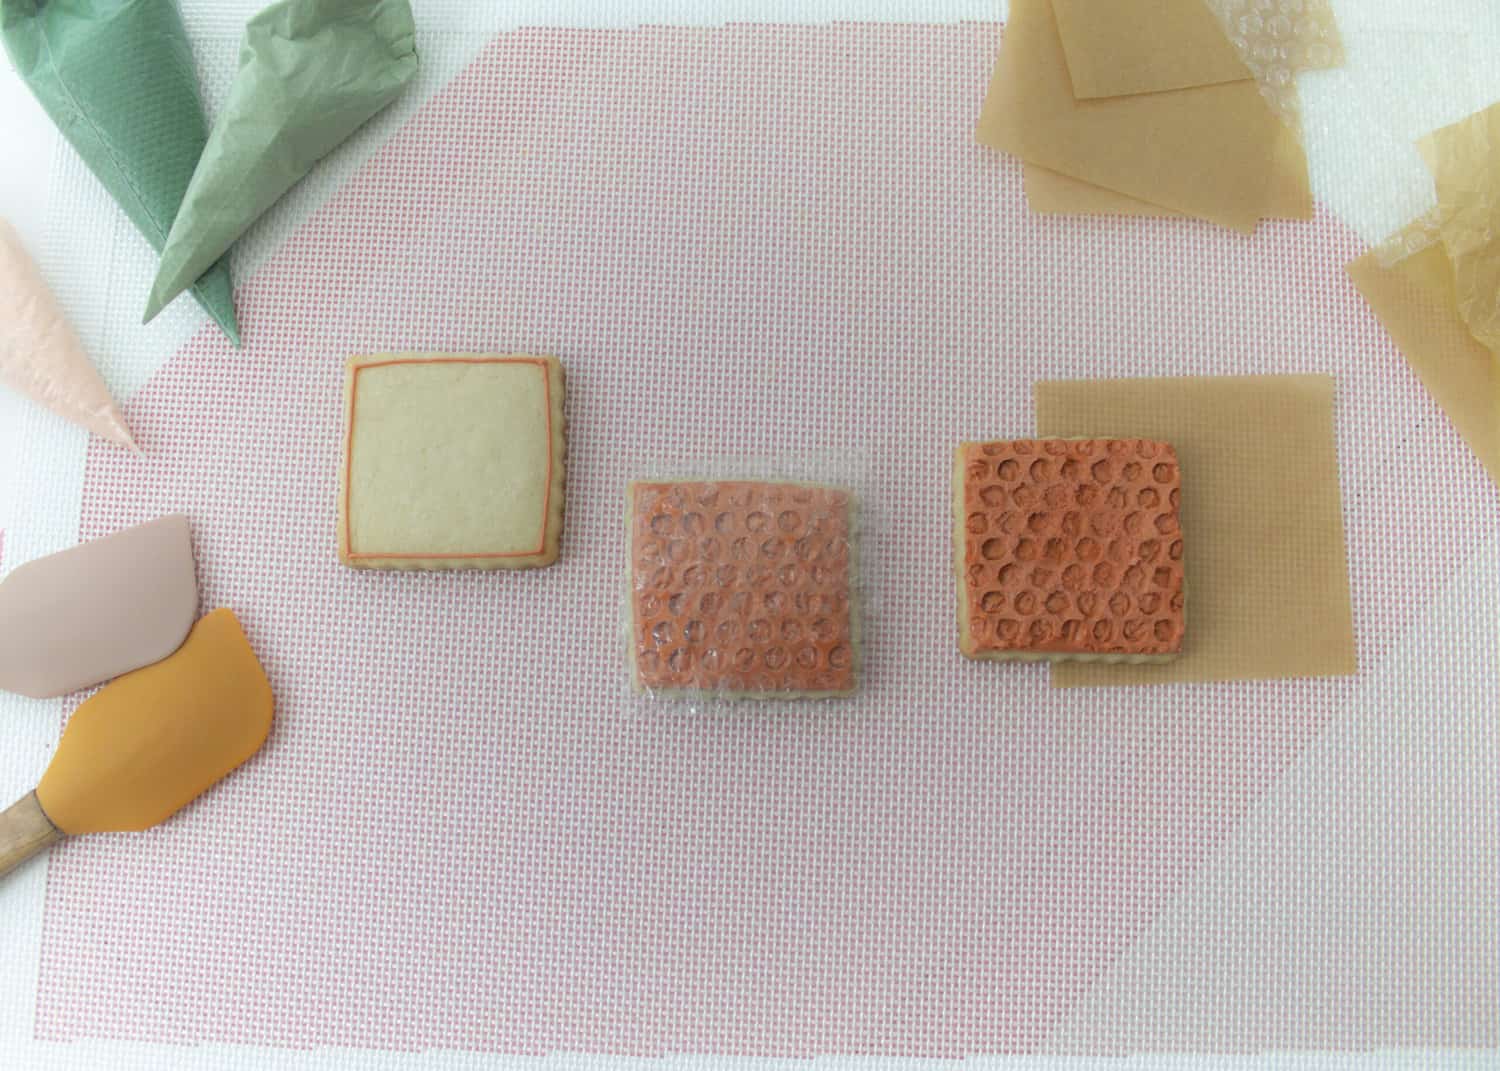 Sugar cookies with honeycomb design